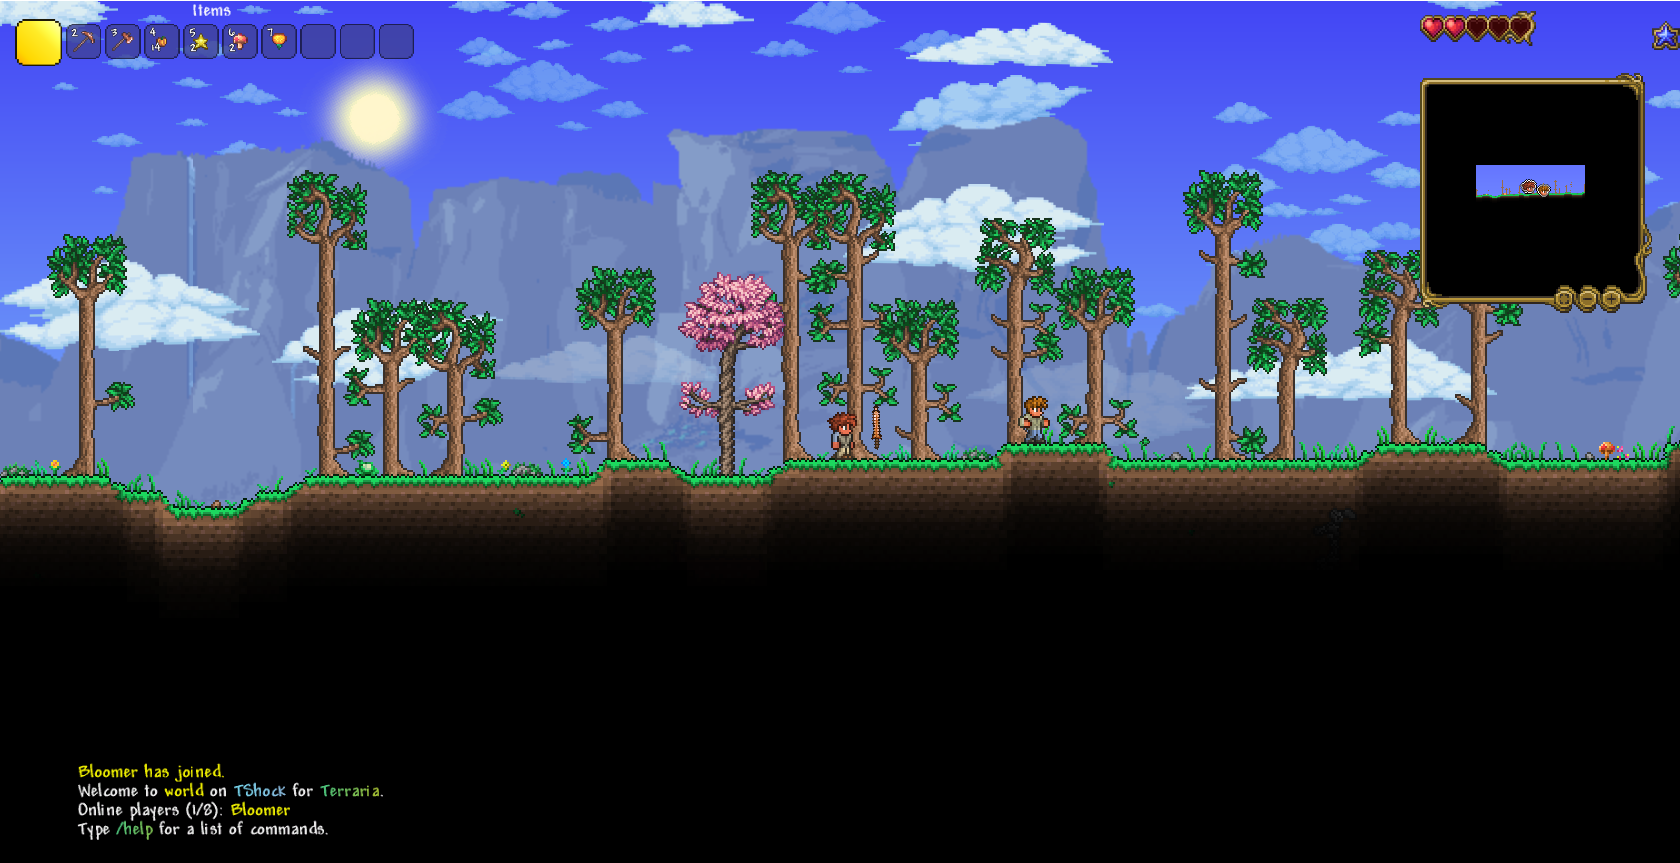 In-game Terraria scenery